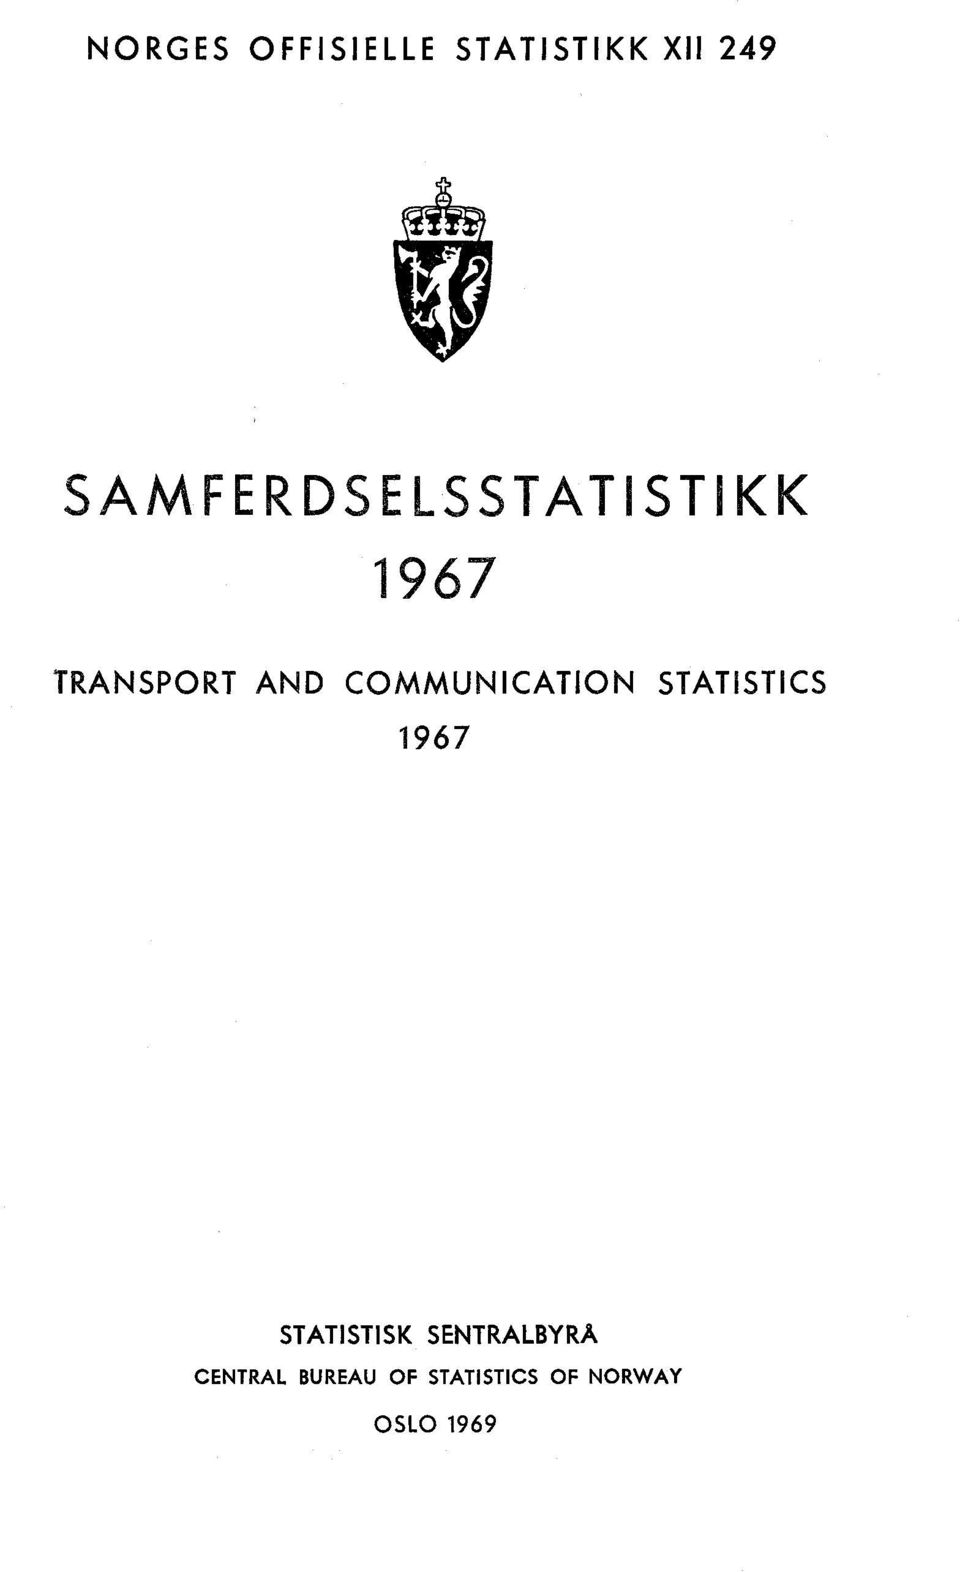 COMMUNICATION STATISTICS STATISTISK